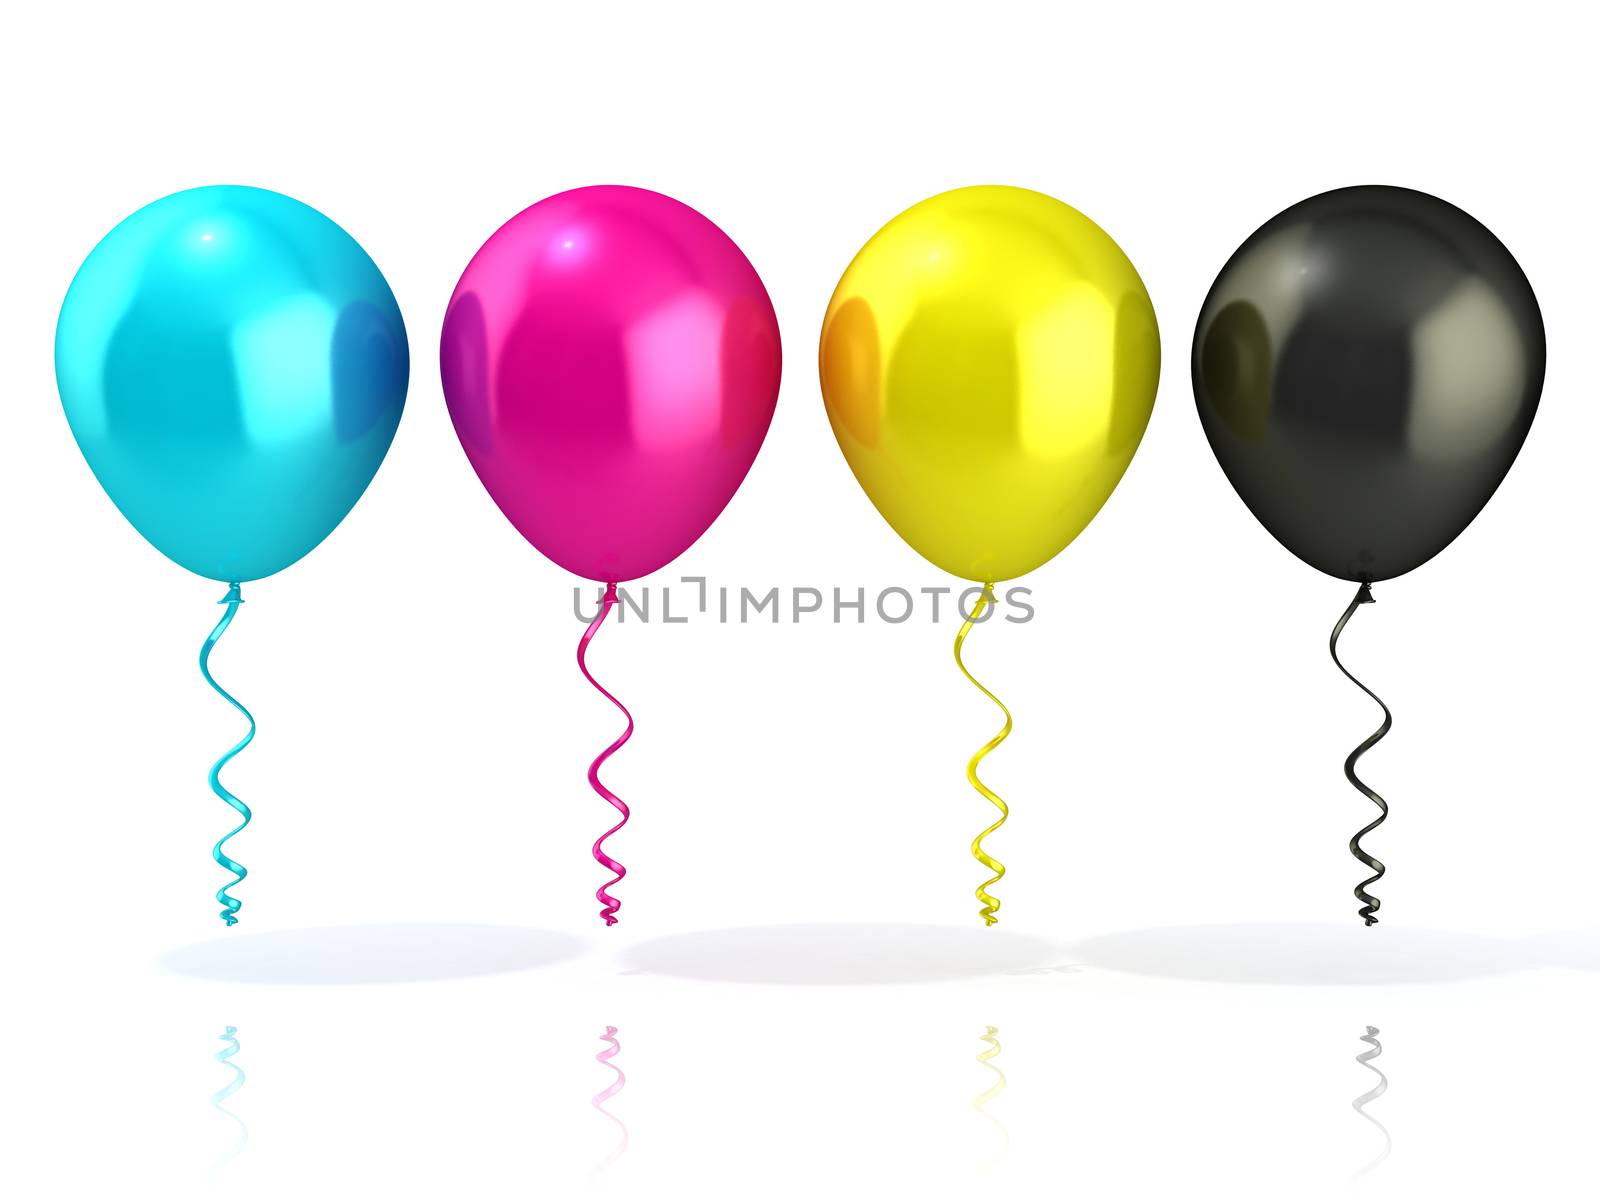 CMYK balloons, isolated on white